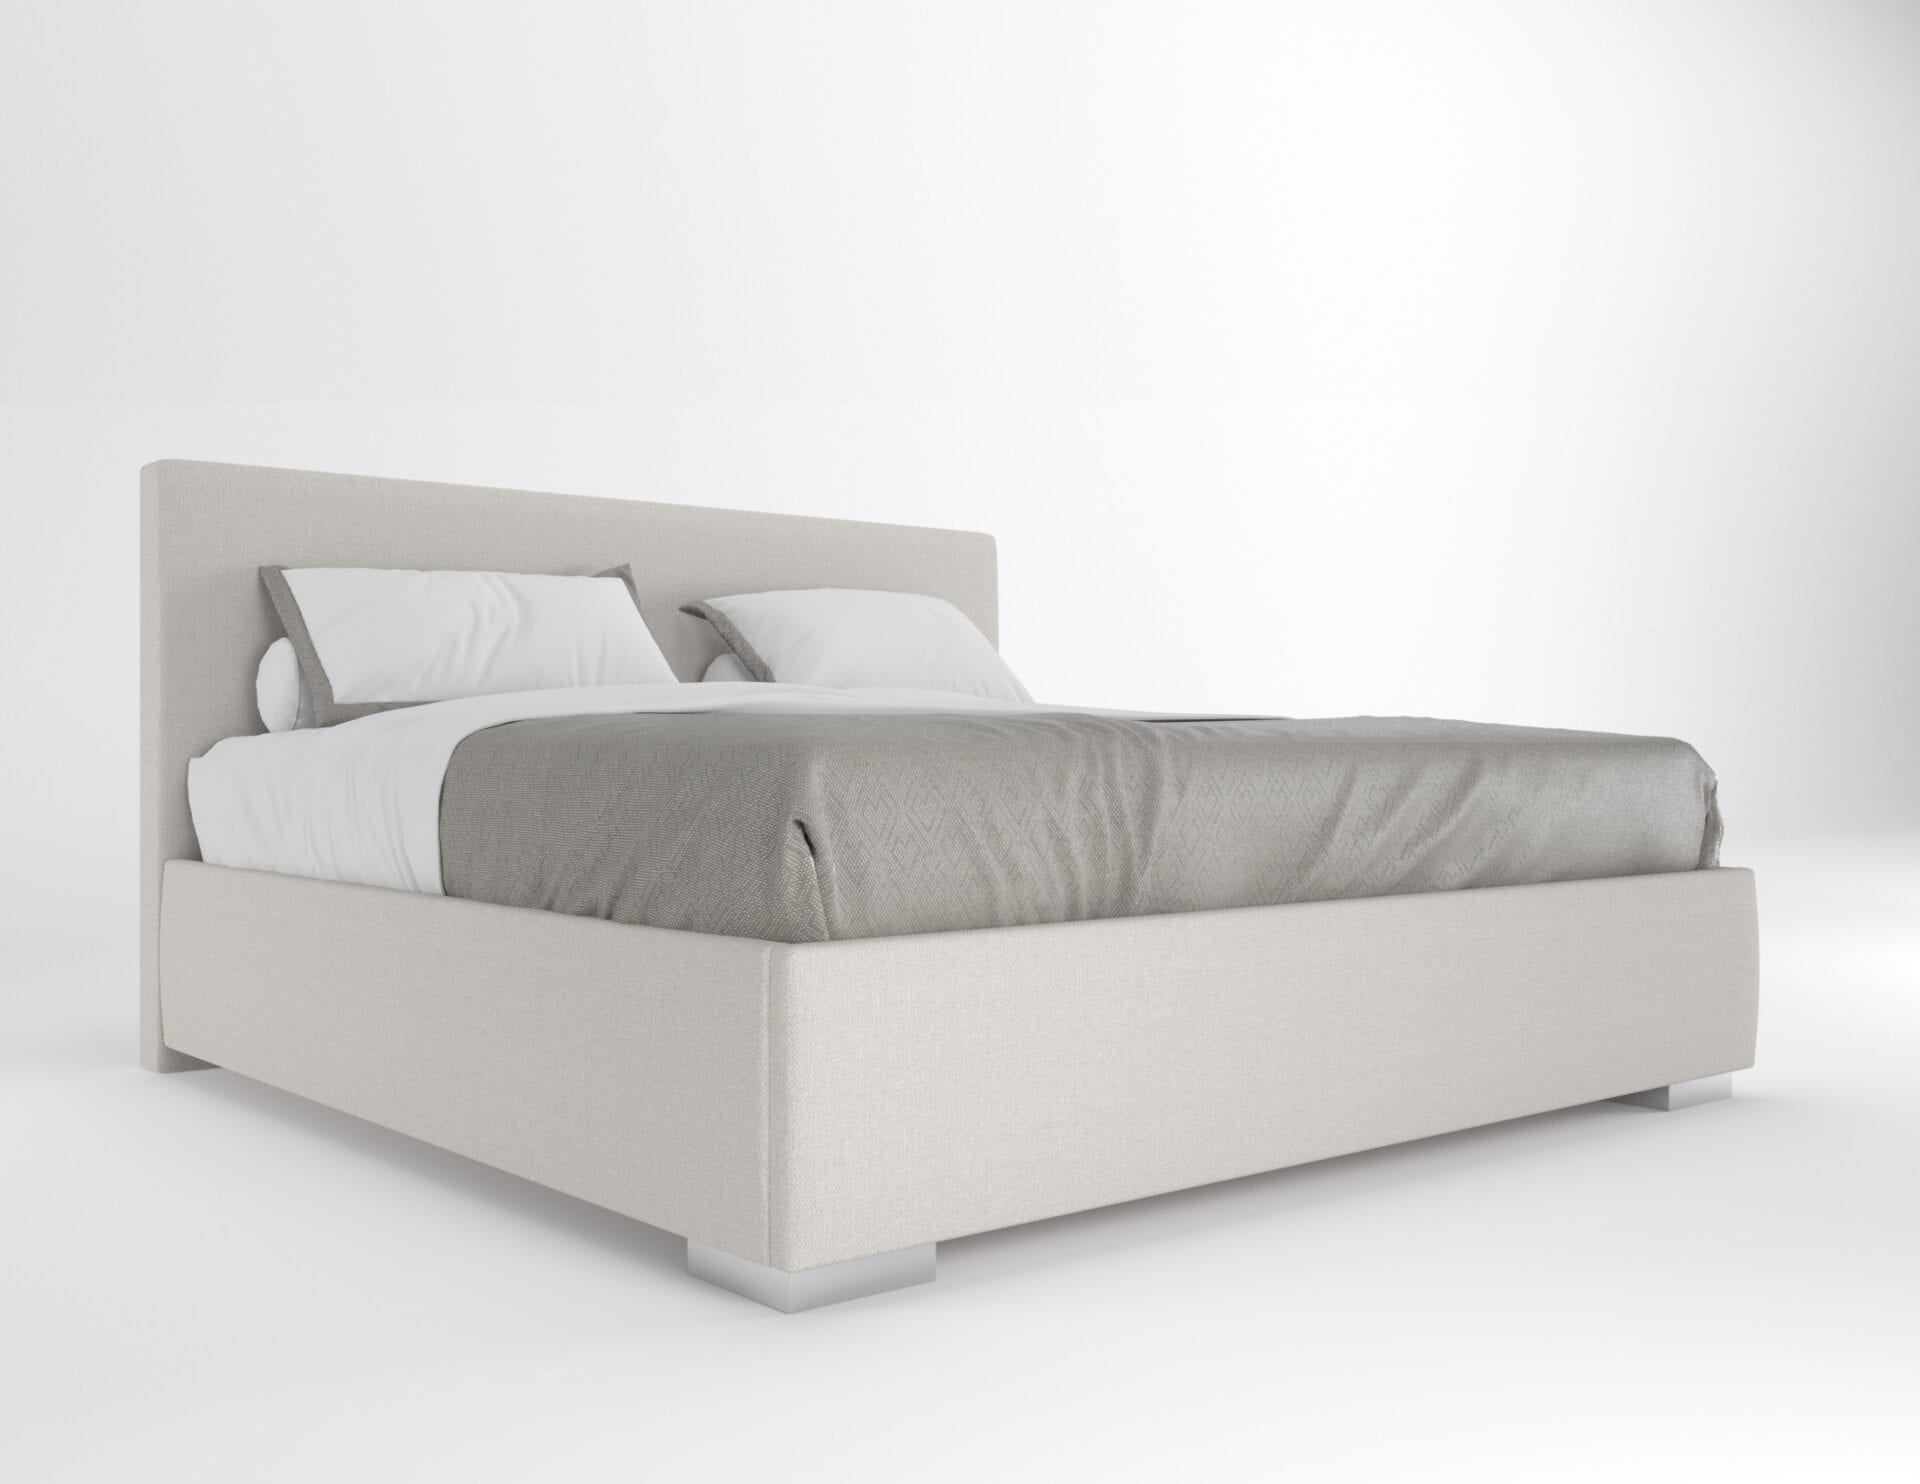 Custom upholstered bed and custom upholstered headboard - Luxury headboard | Blend Home Furnishings